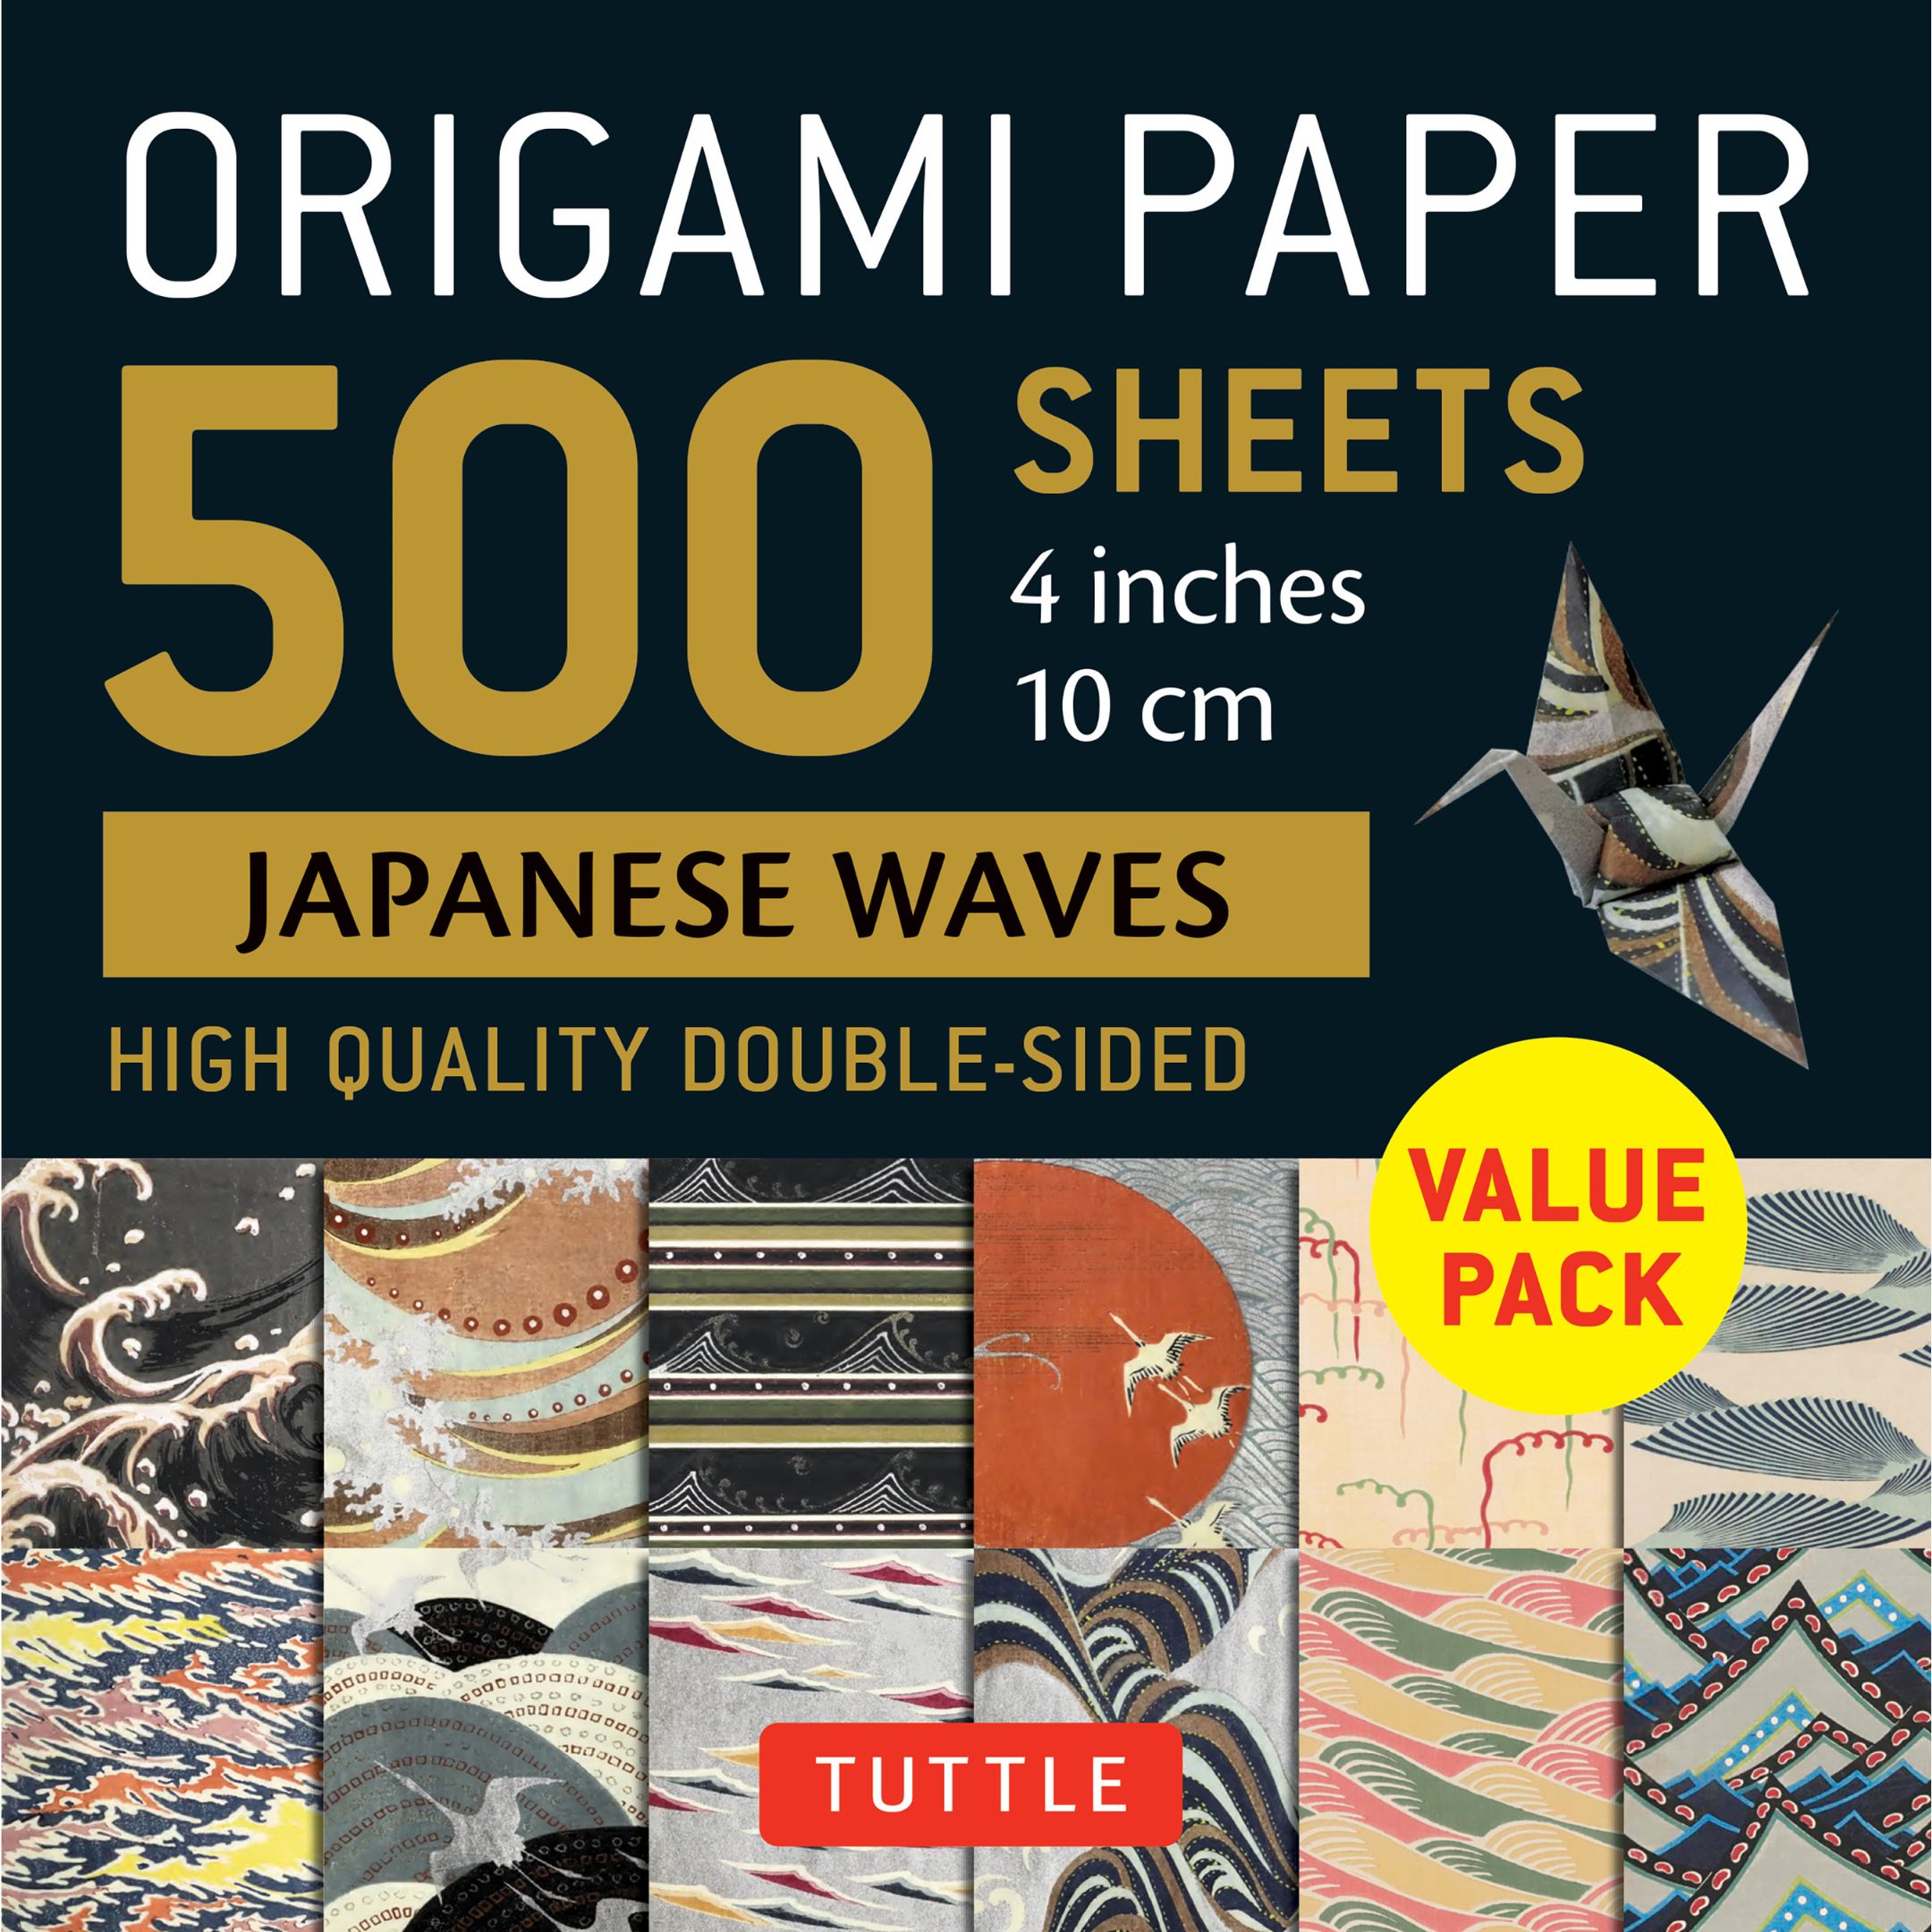 Japanese Paper Toys Kit (9780804846325) - Tuttle Publishing